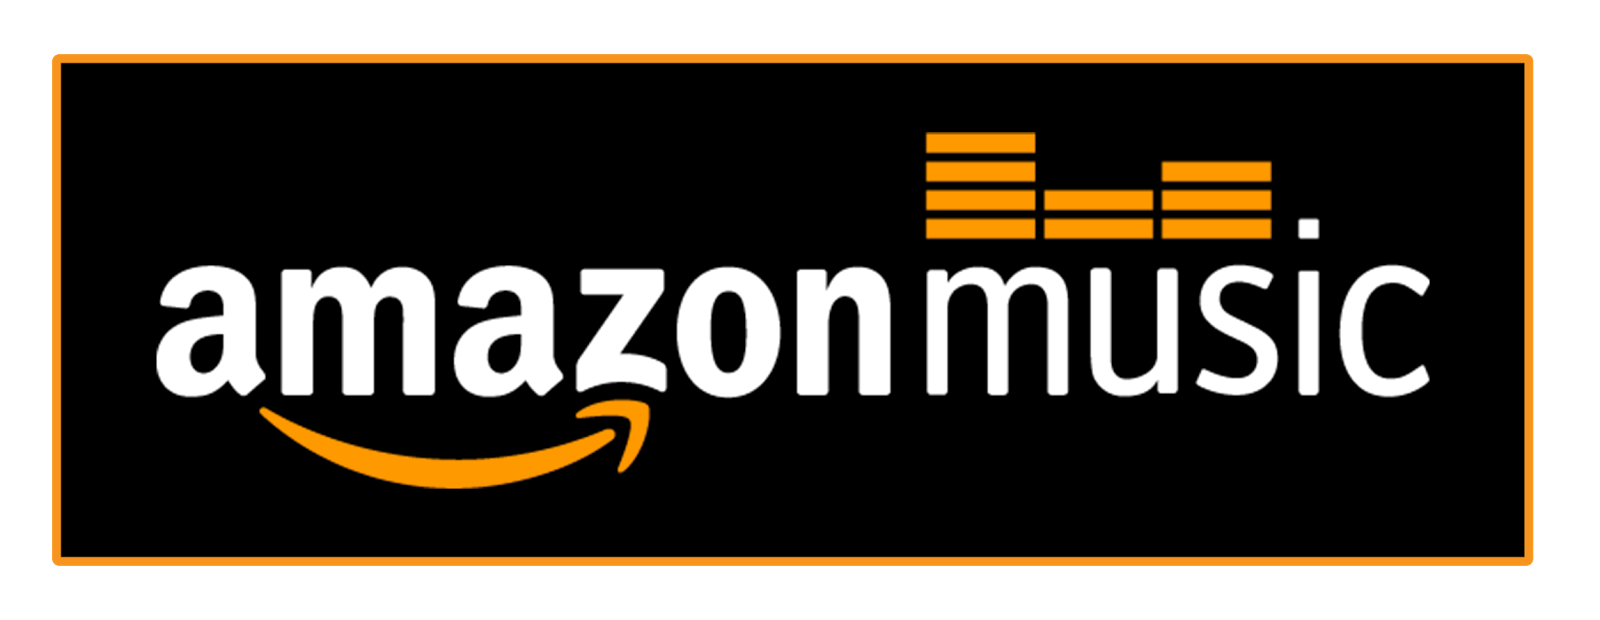 Amazon_Music_Logo.png